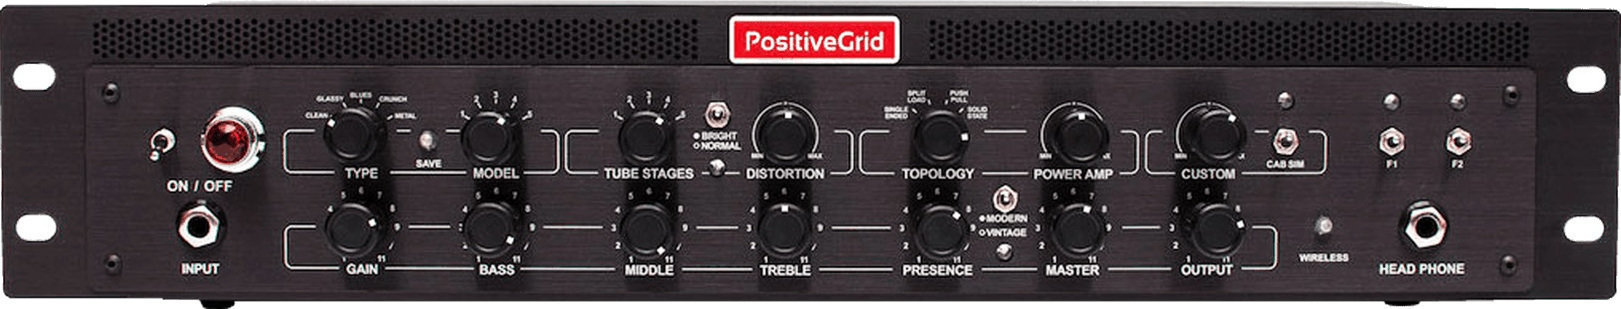 Modeling Guitar Amplifier Positive Grid BIAS Rack Processor